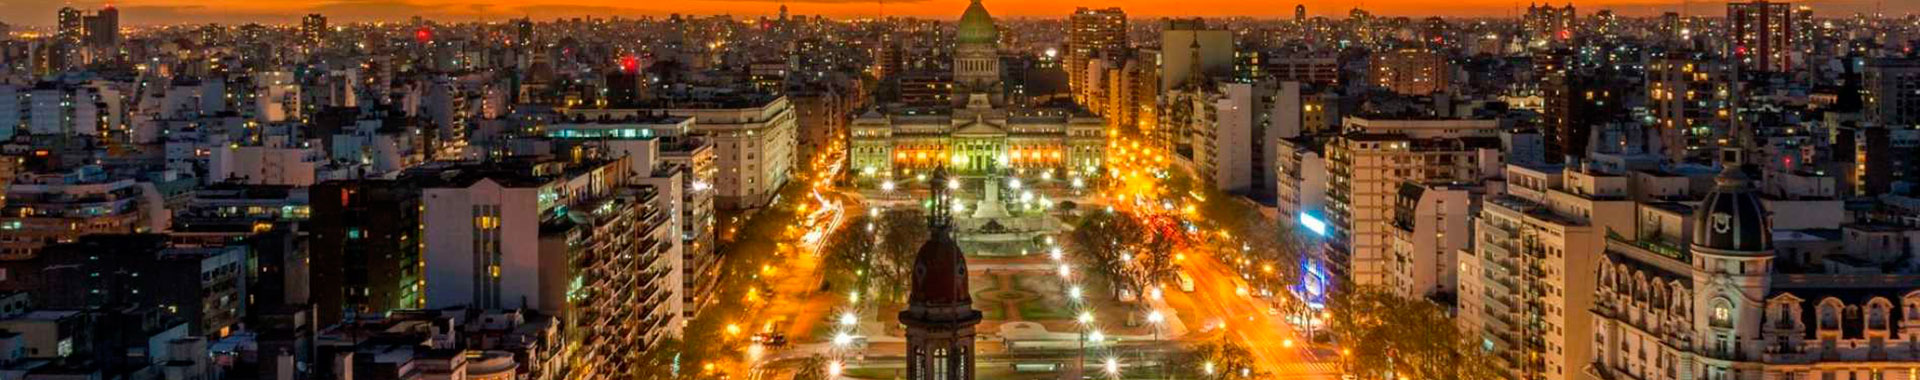 Simplemente Buenos Aires